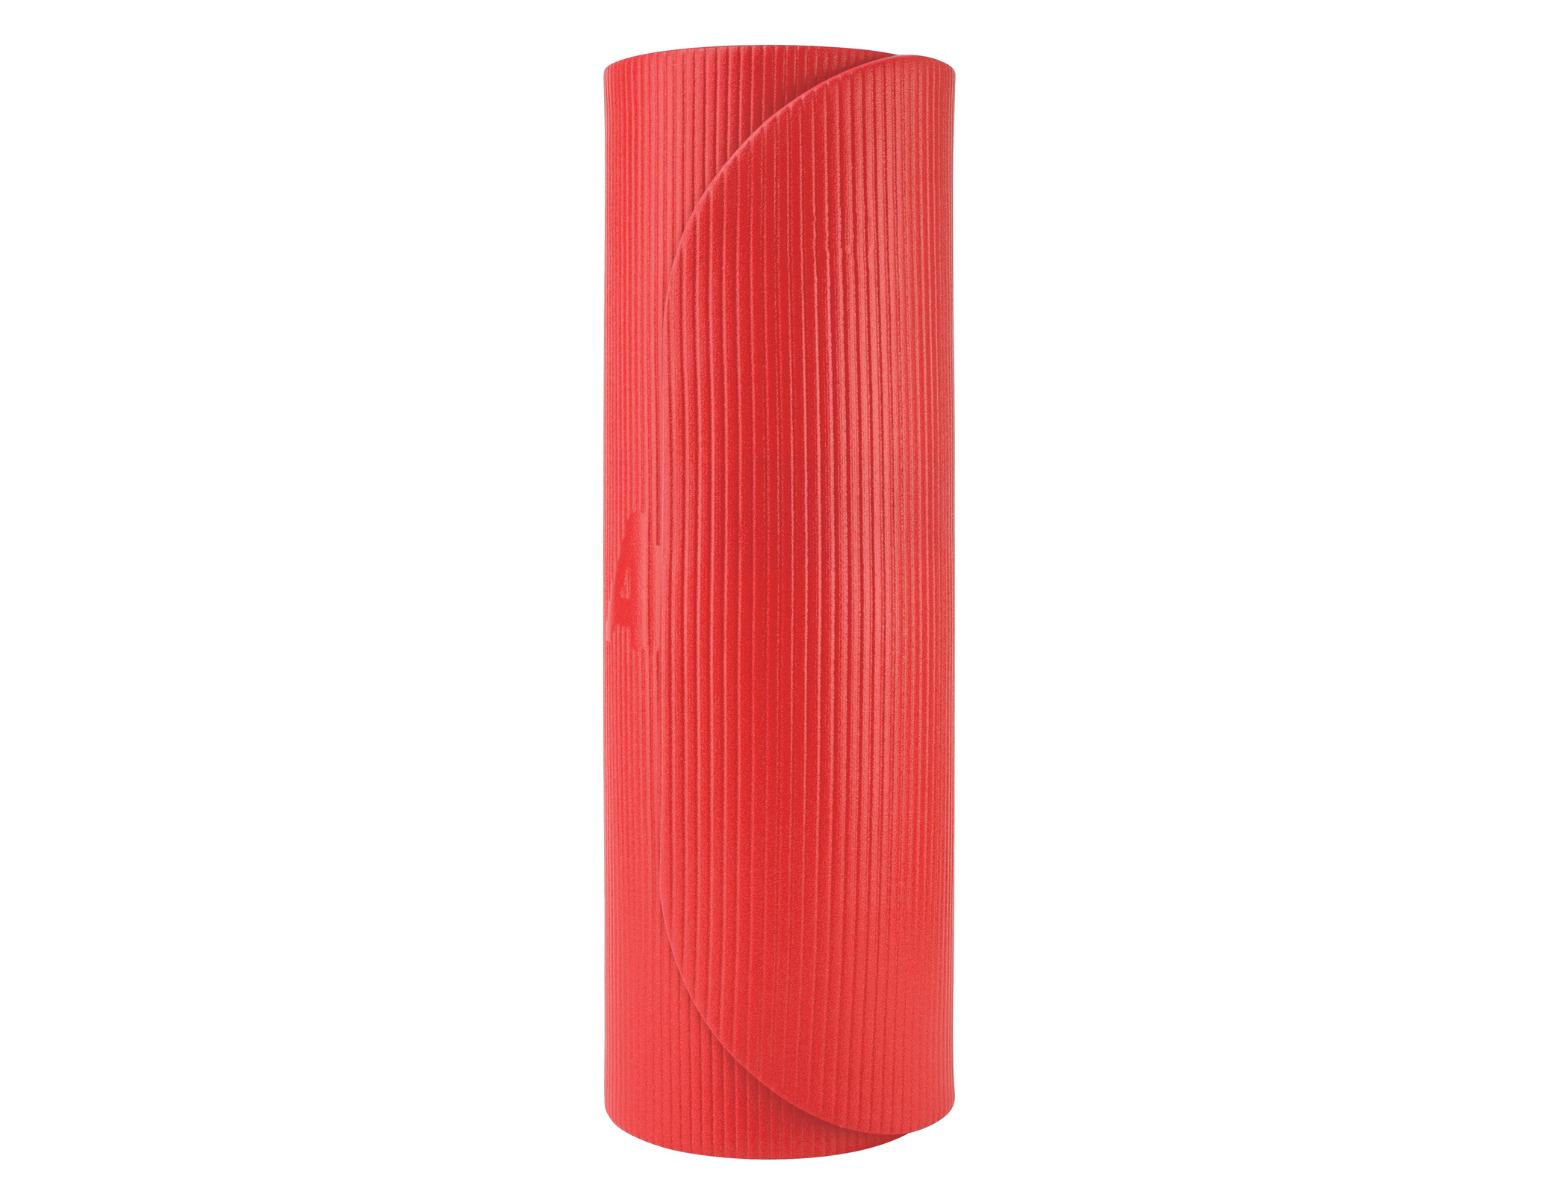 Airex tapis Coronella - 200 x 60 x 1,5 cm - rouge